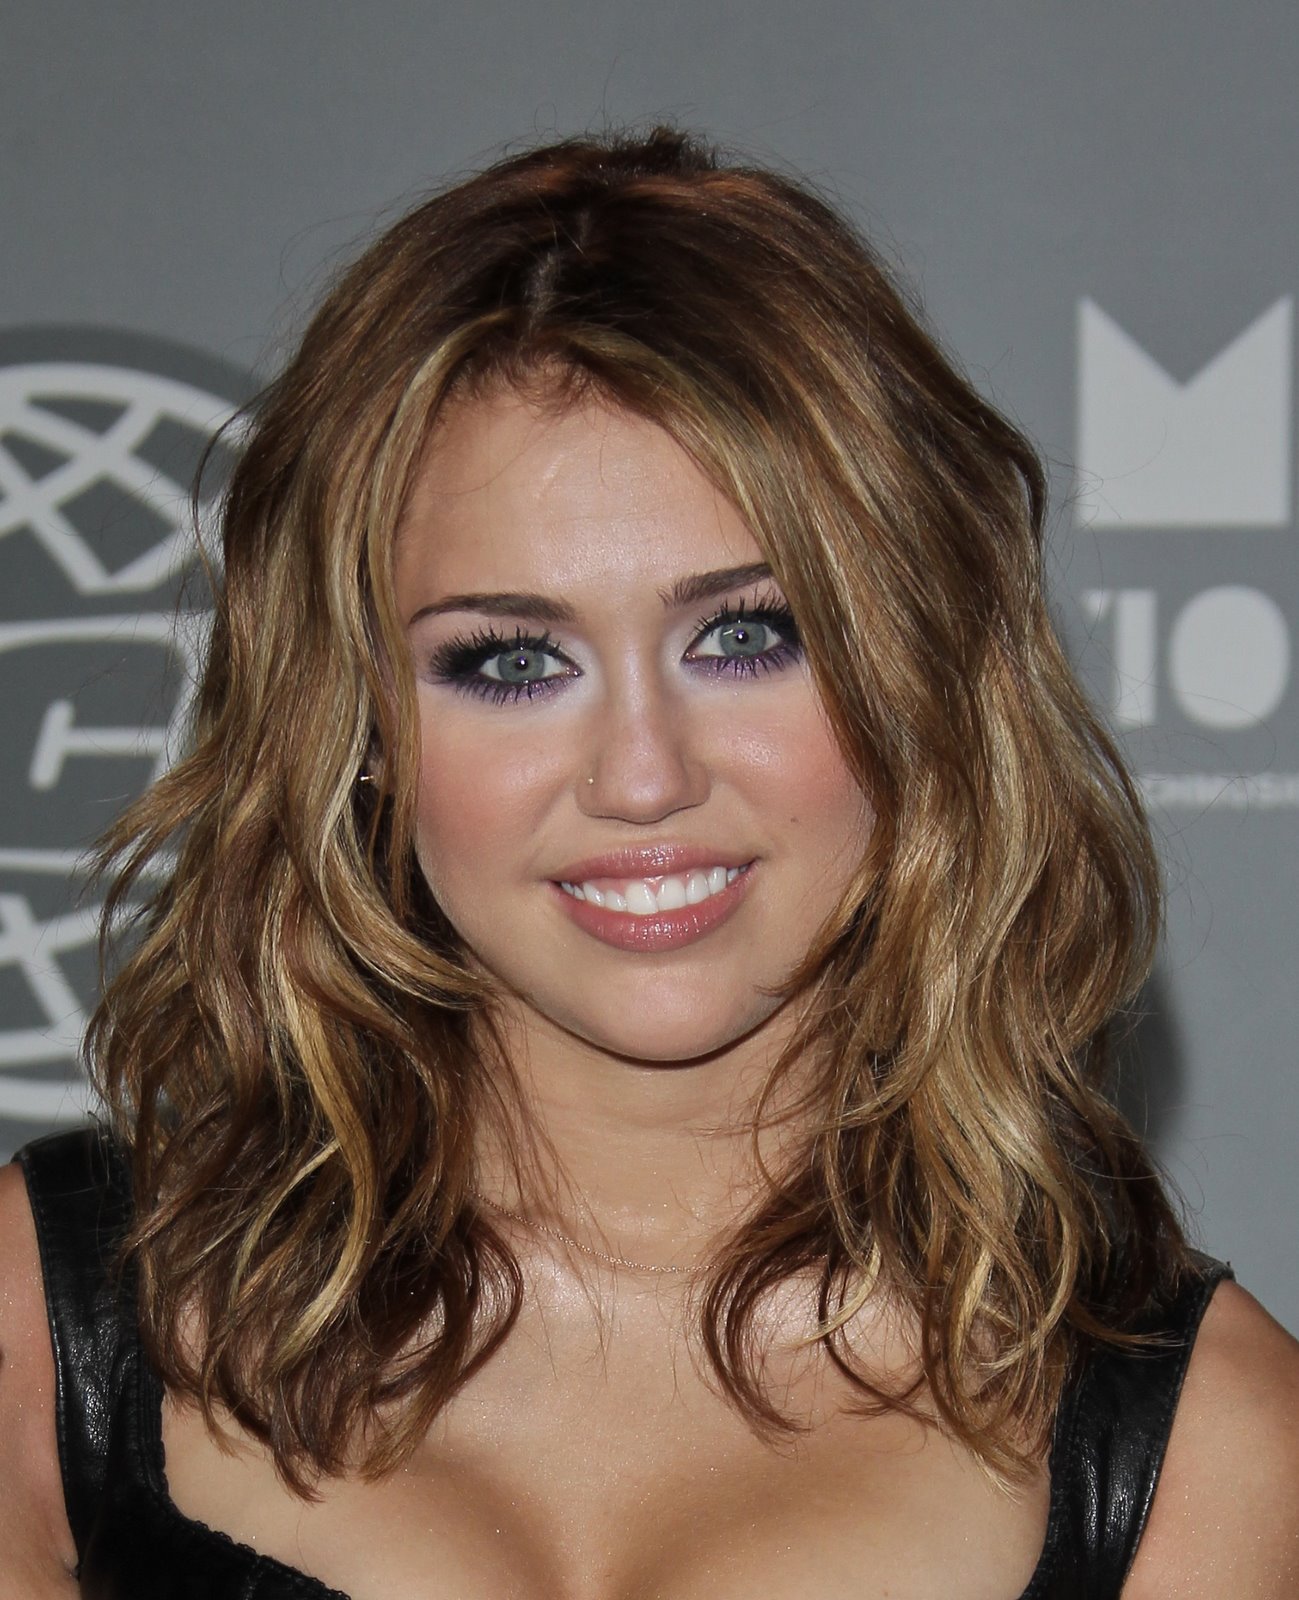 Miley Cyrus Wallpaper HD 1080p Desktop Background For